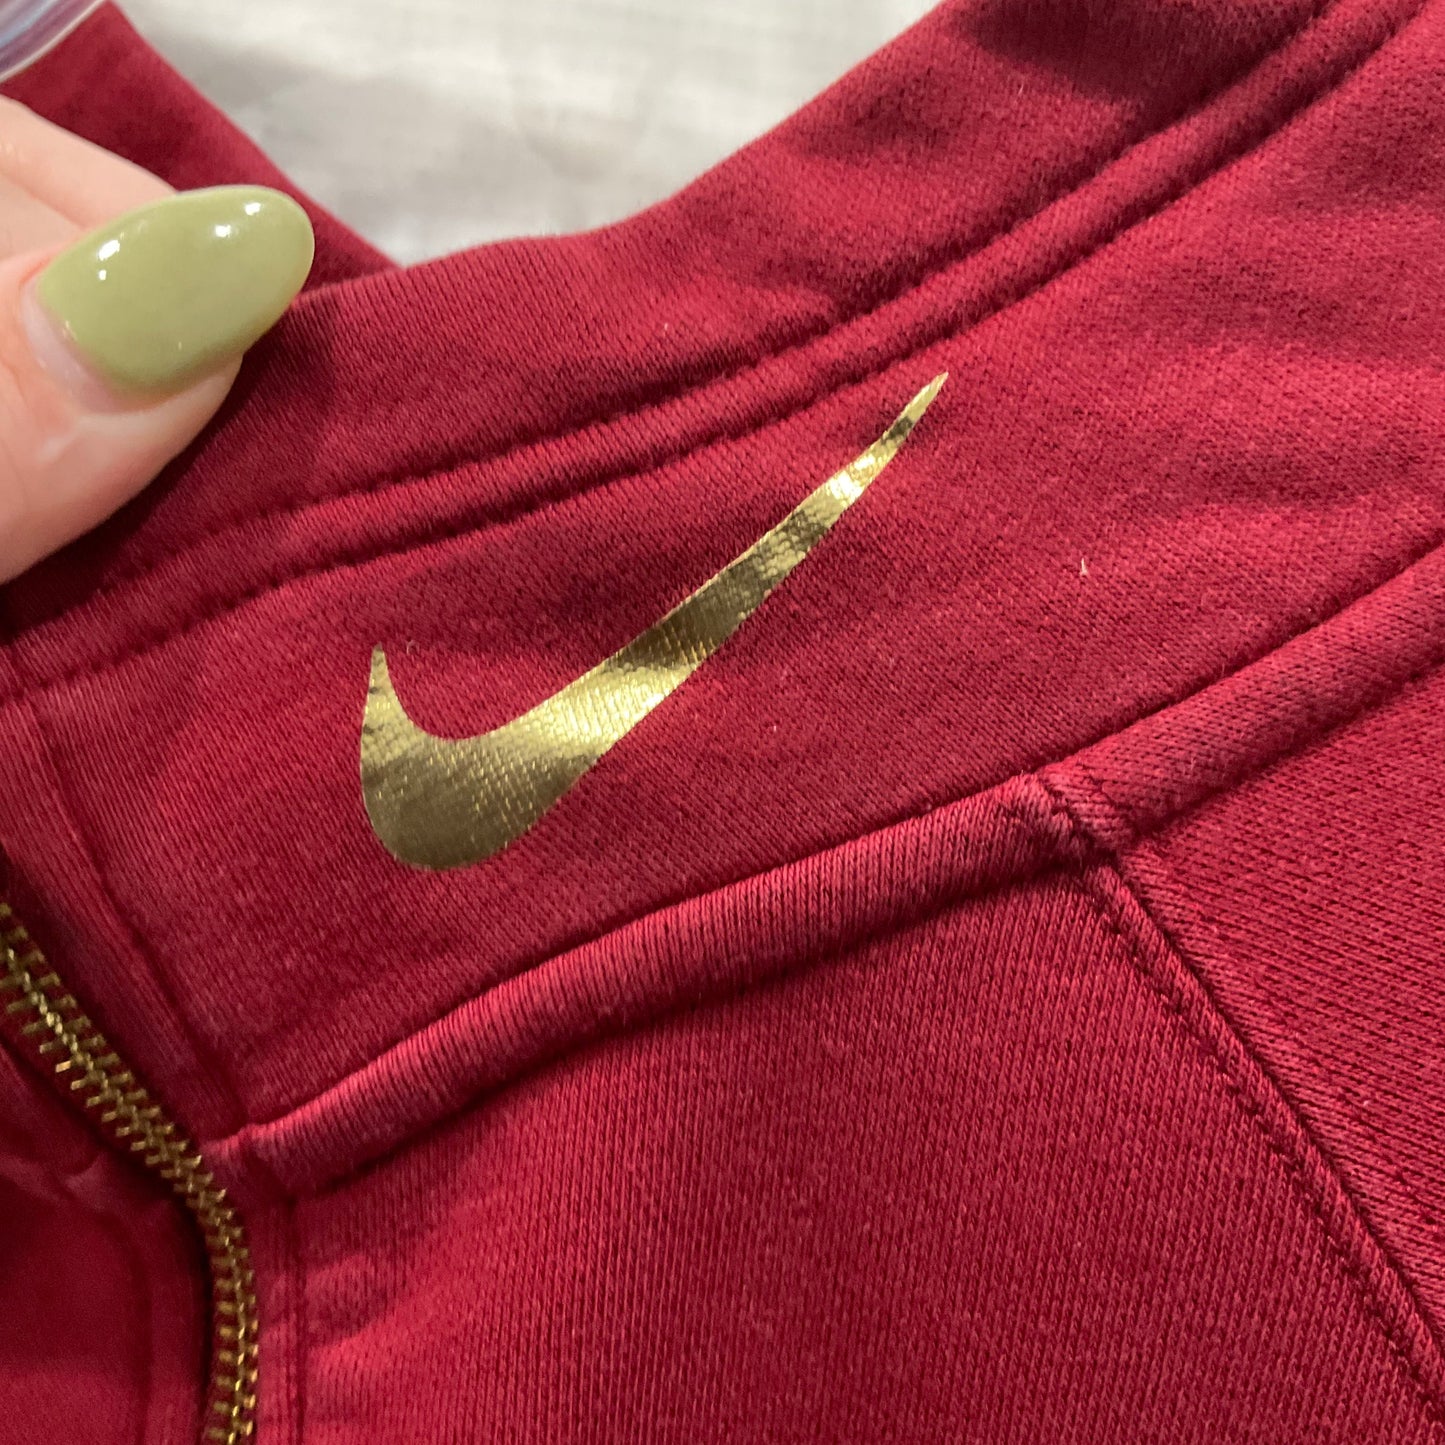 Athletic Sweatshirt Crewneck By Nike Apparel  Size: 2x